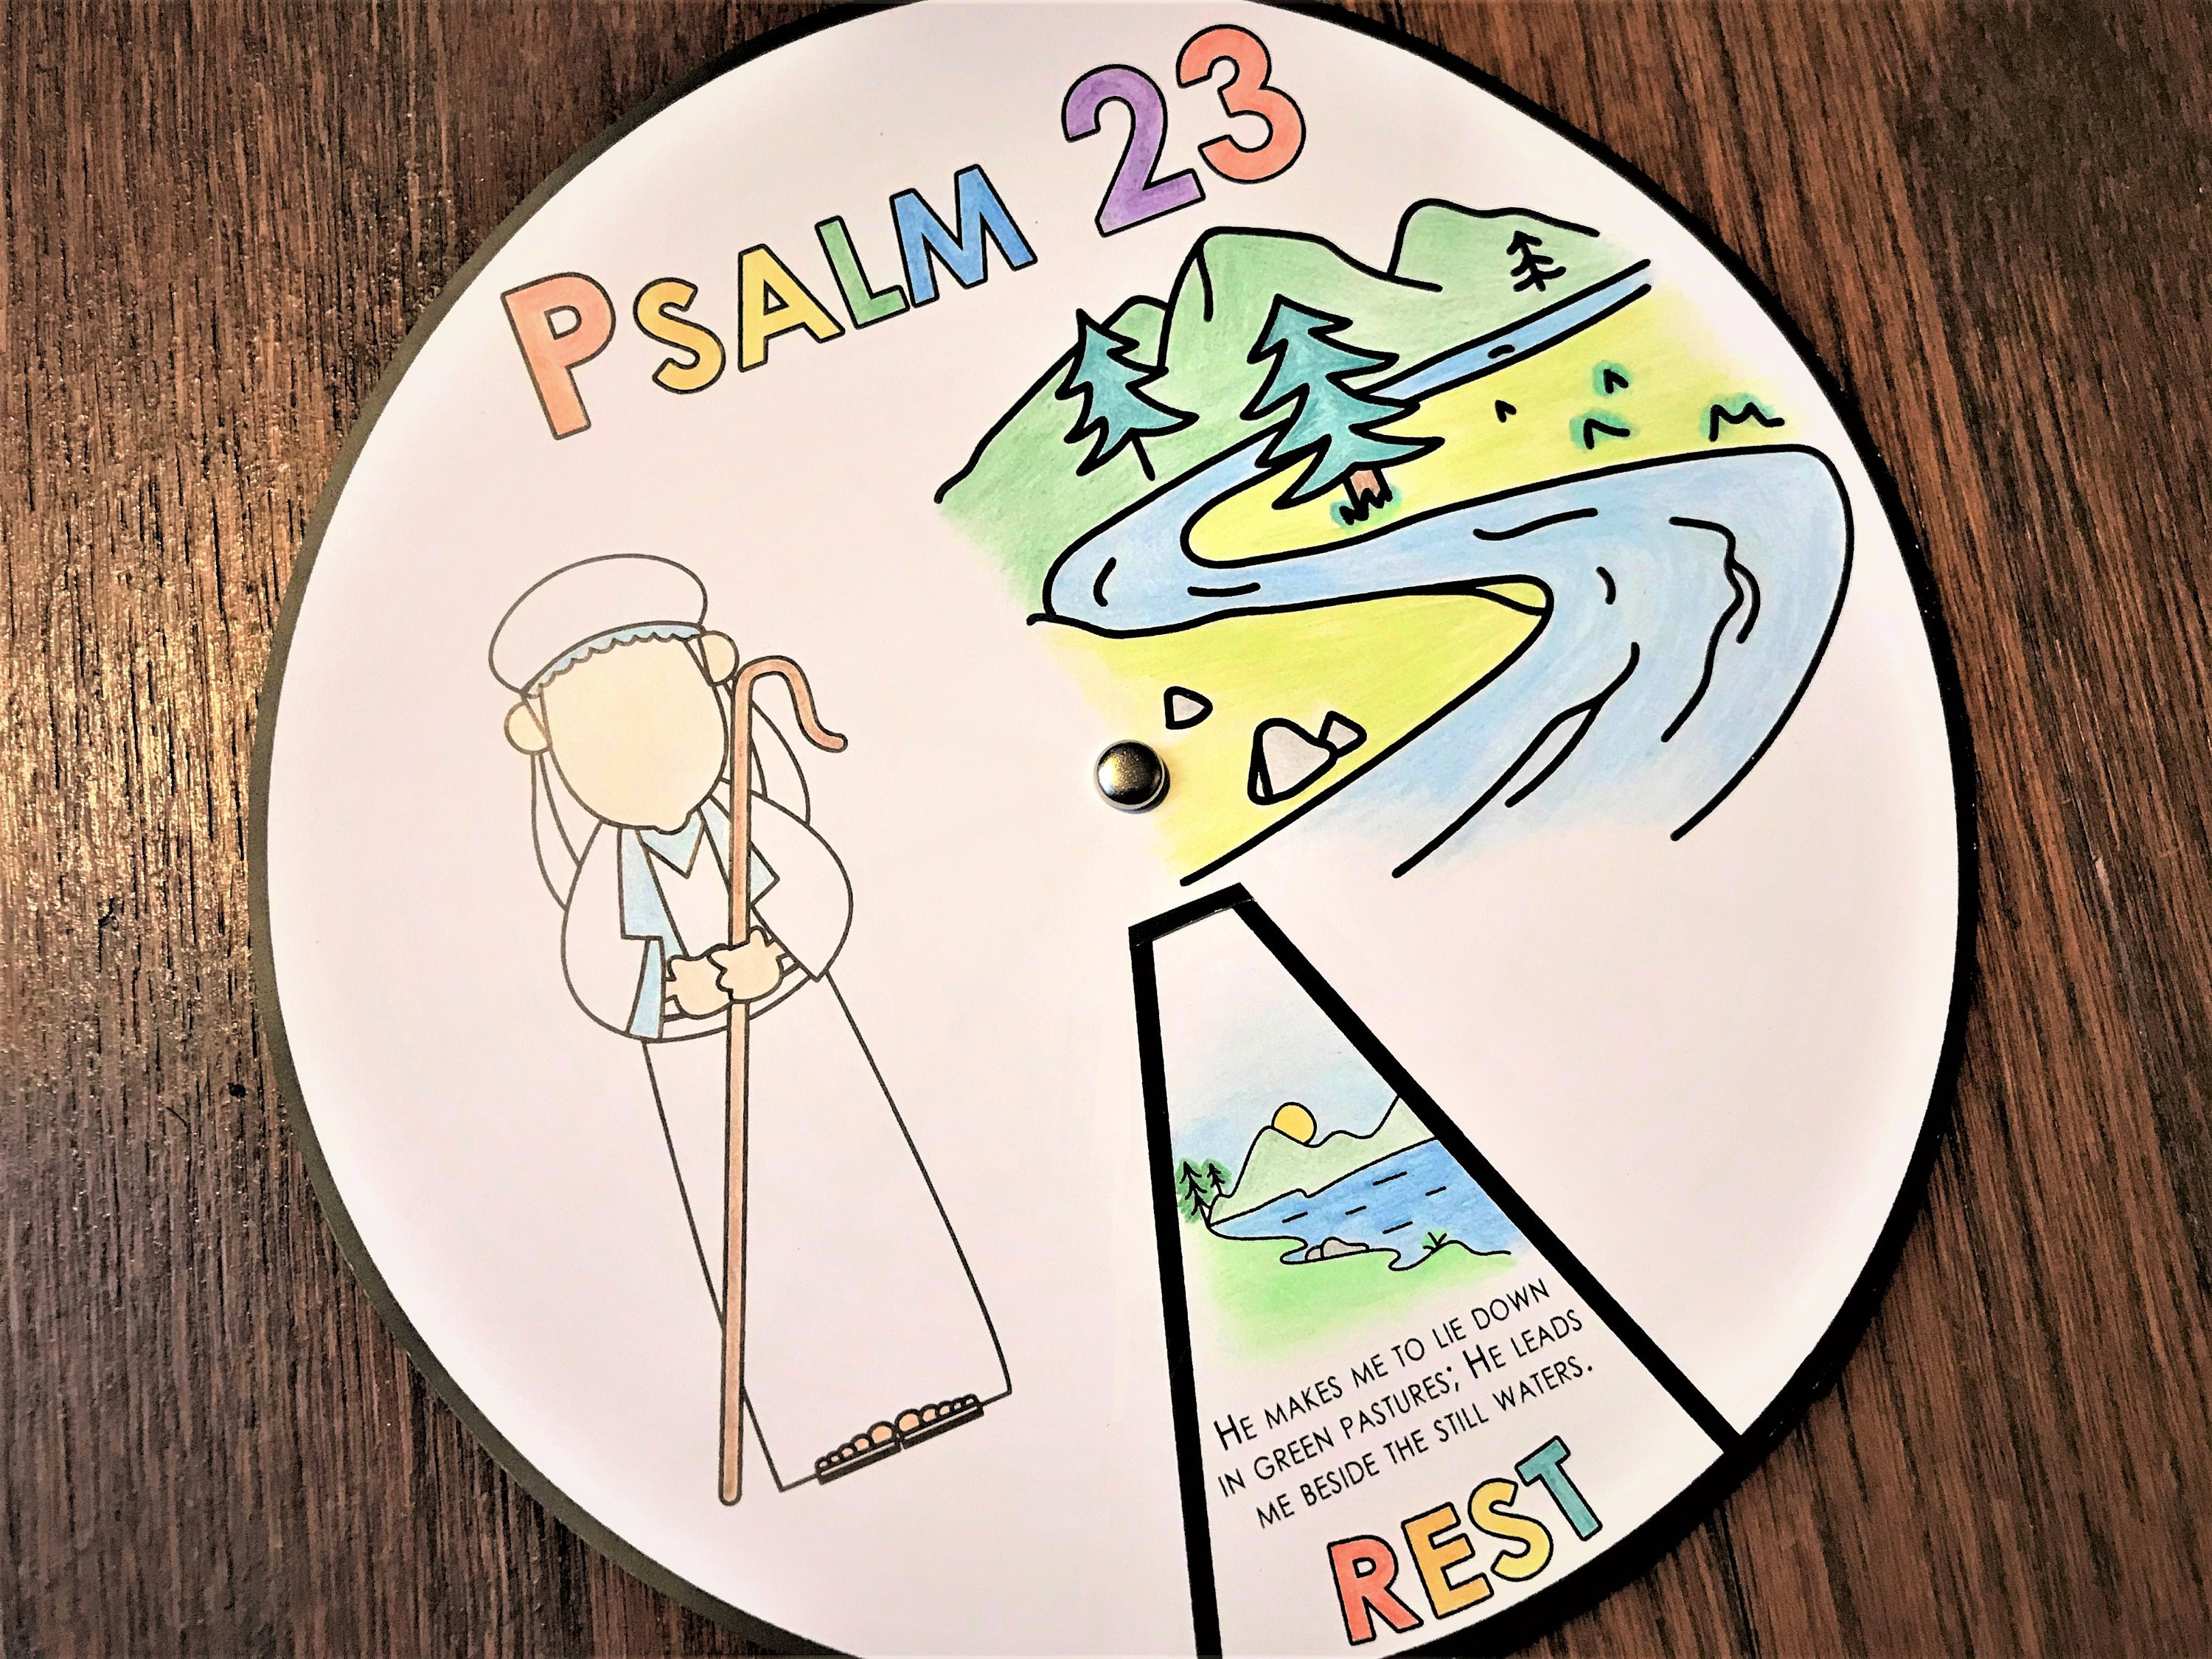 Shepherd's Staff (Psalm 23)  Sunday school crafts, School crafts,  Christian crafts